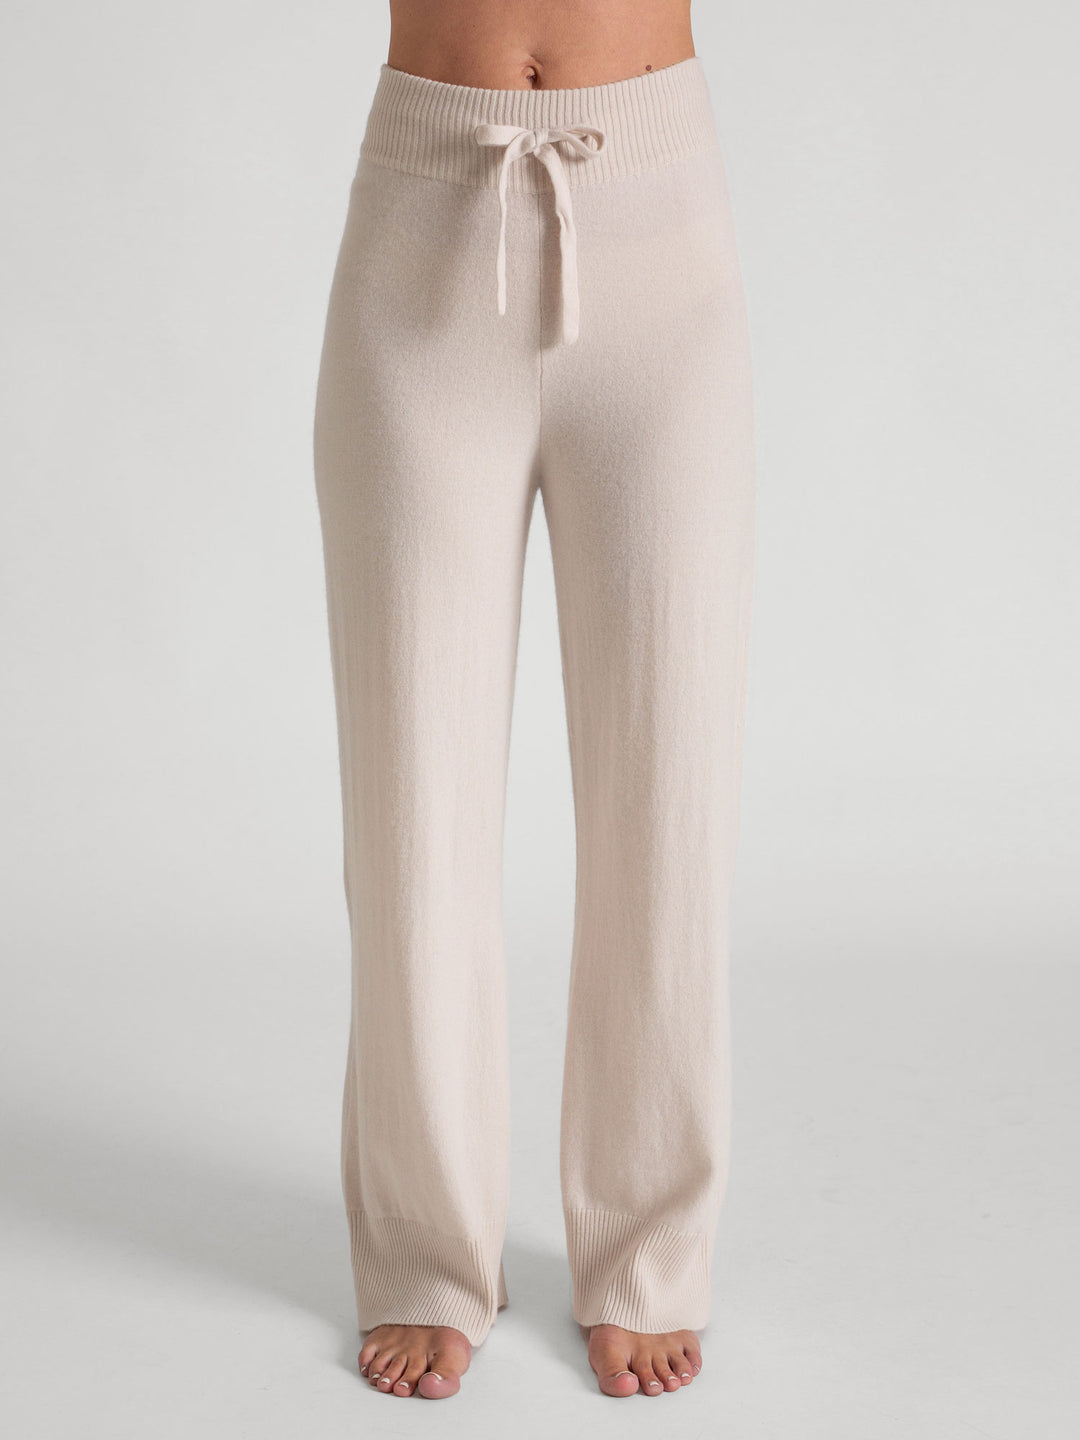 Cashmere pants "Lux Pants" in 100% pure cashmere. Color: Pearl. Scandinavian design by Kashmina.